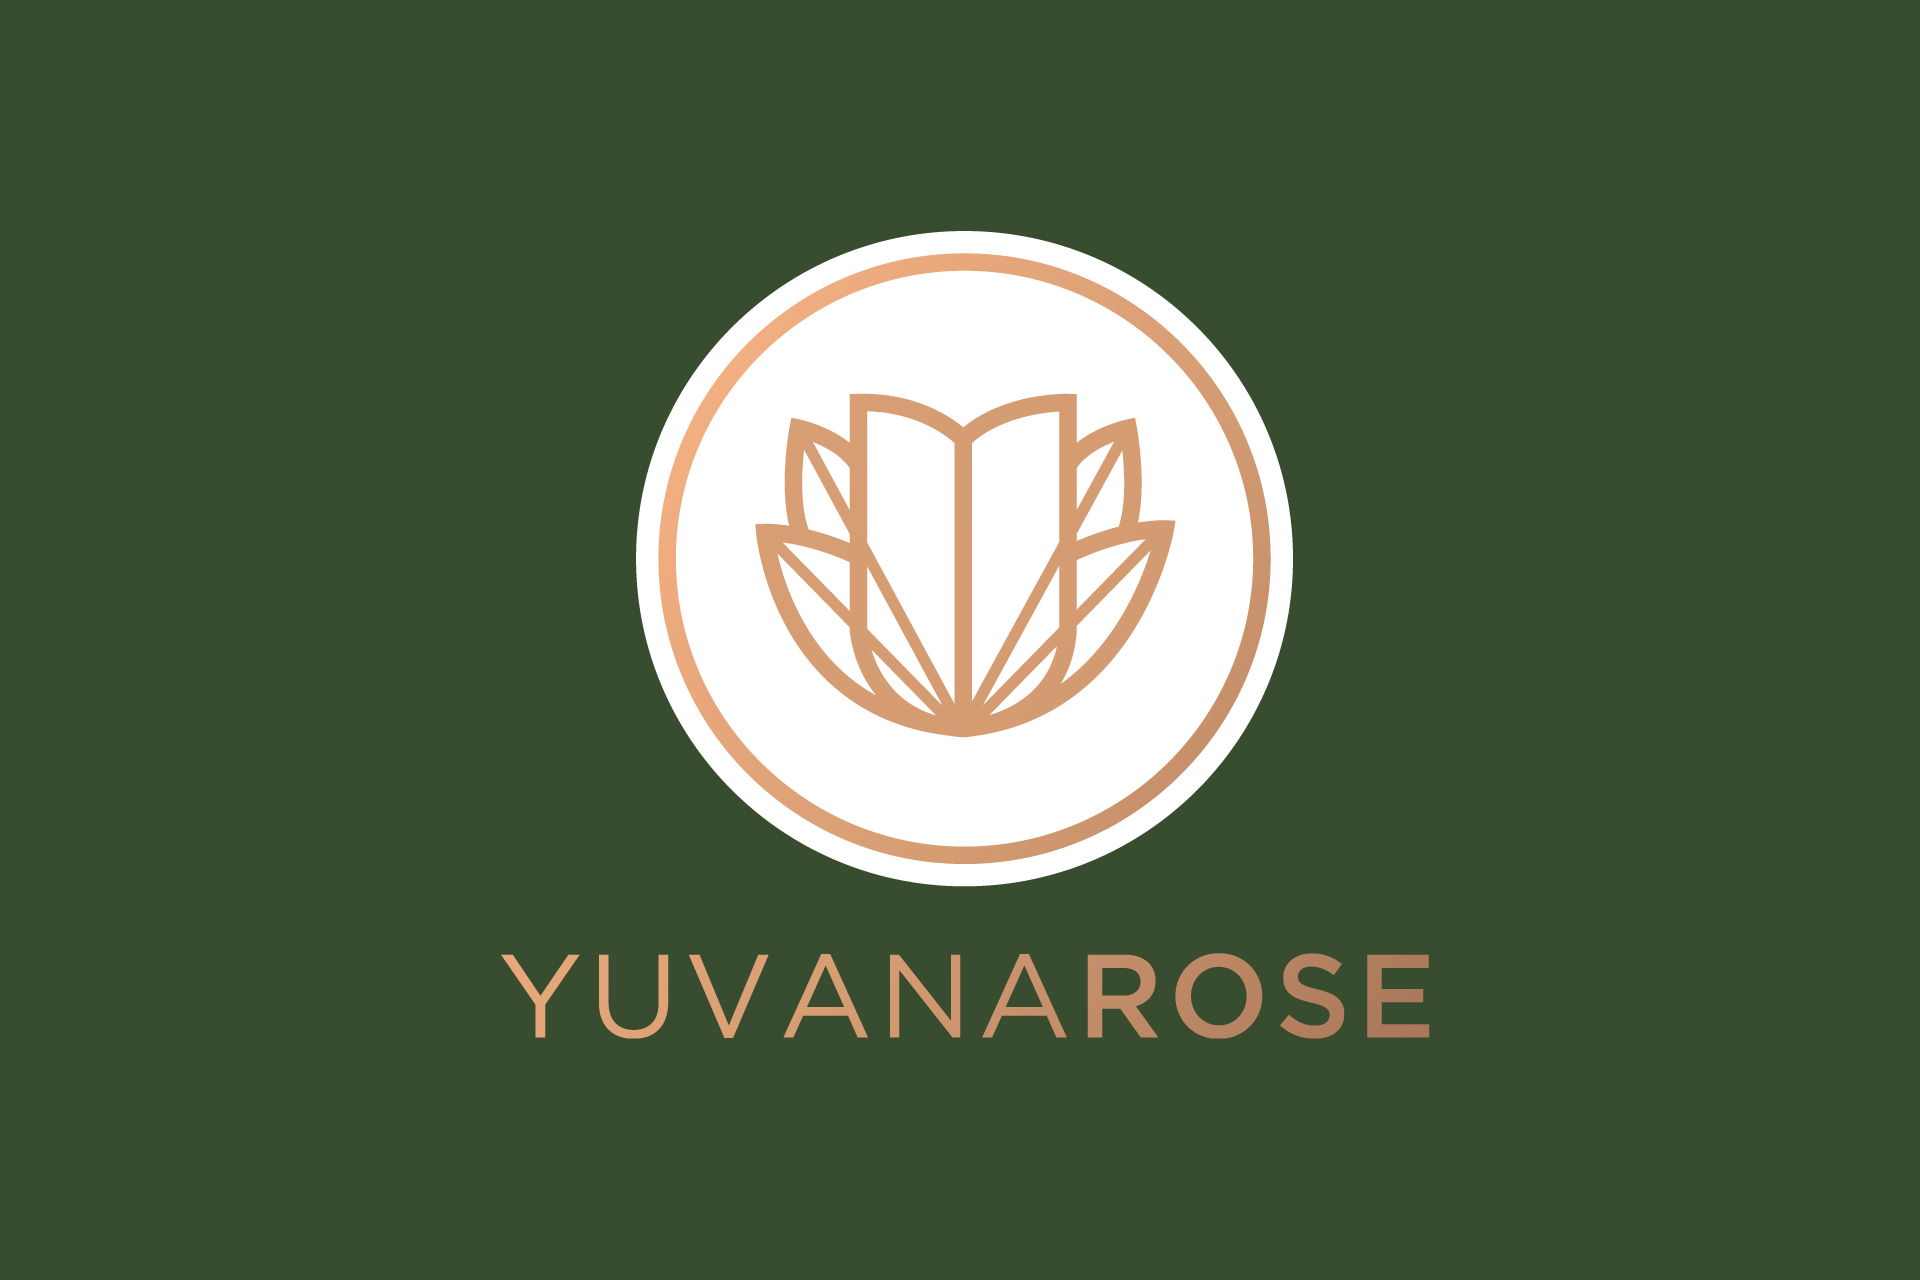 Yuvana rose logo design Surrey